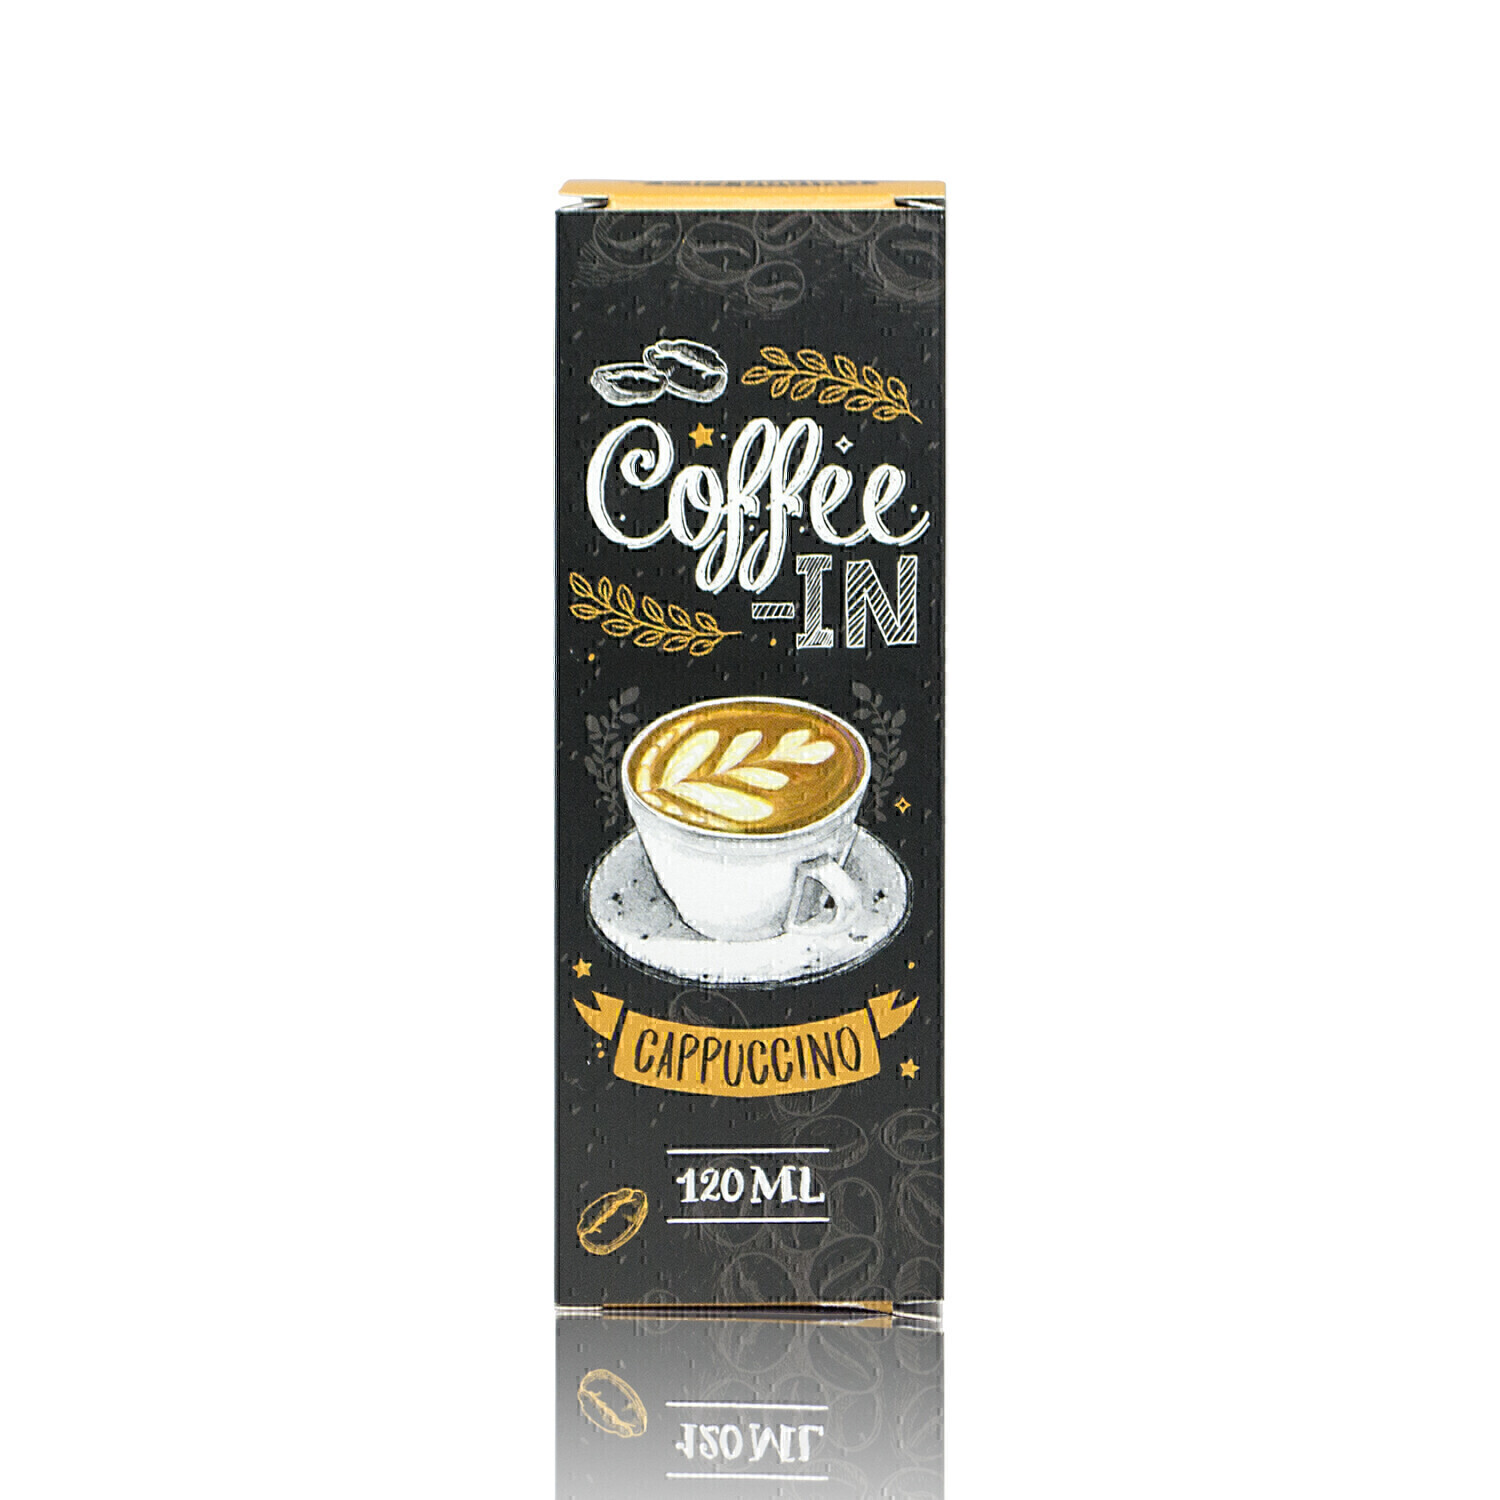 COFFEE-IN SALT: CAPPUCHINO 20MG STRONG